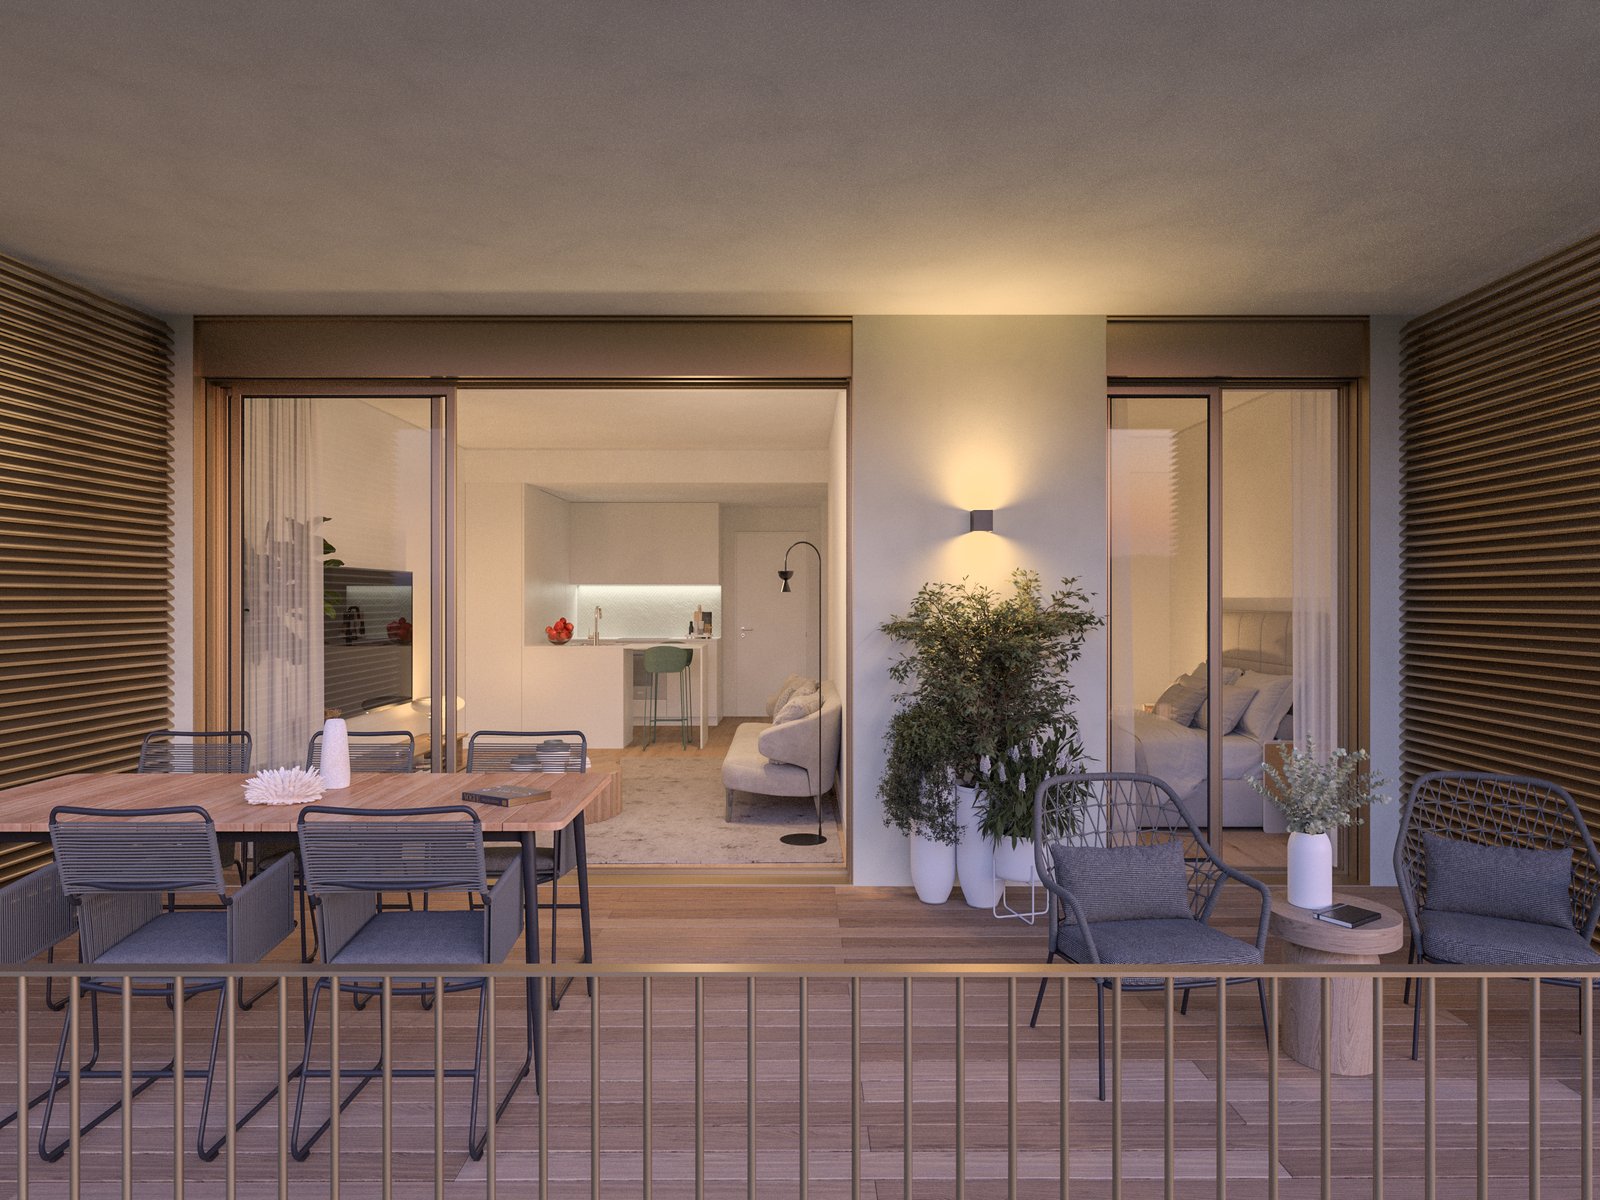 2 bedroom apartment with balcony in new development in Miraflores 2052961900